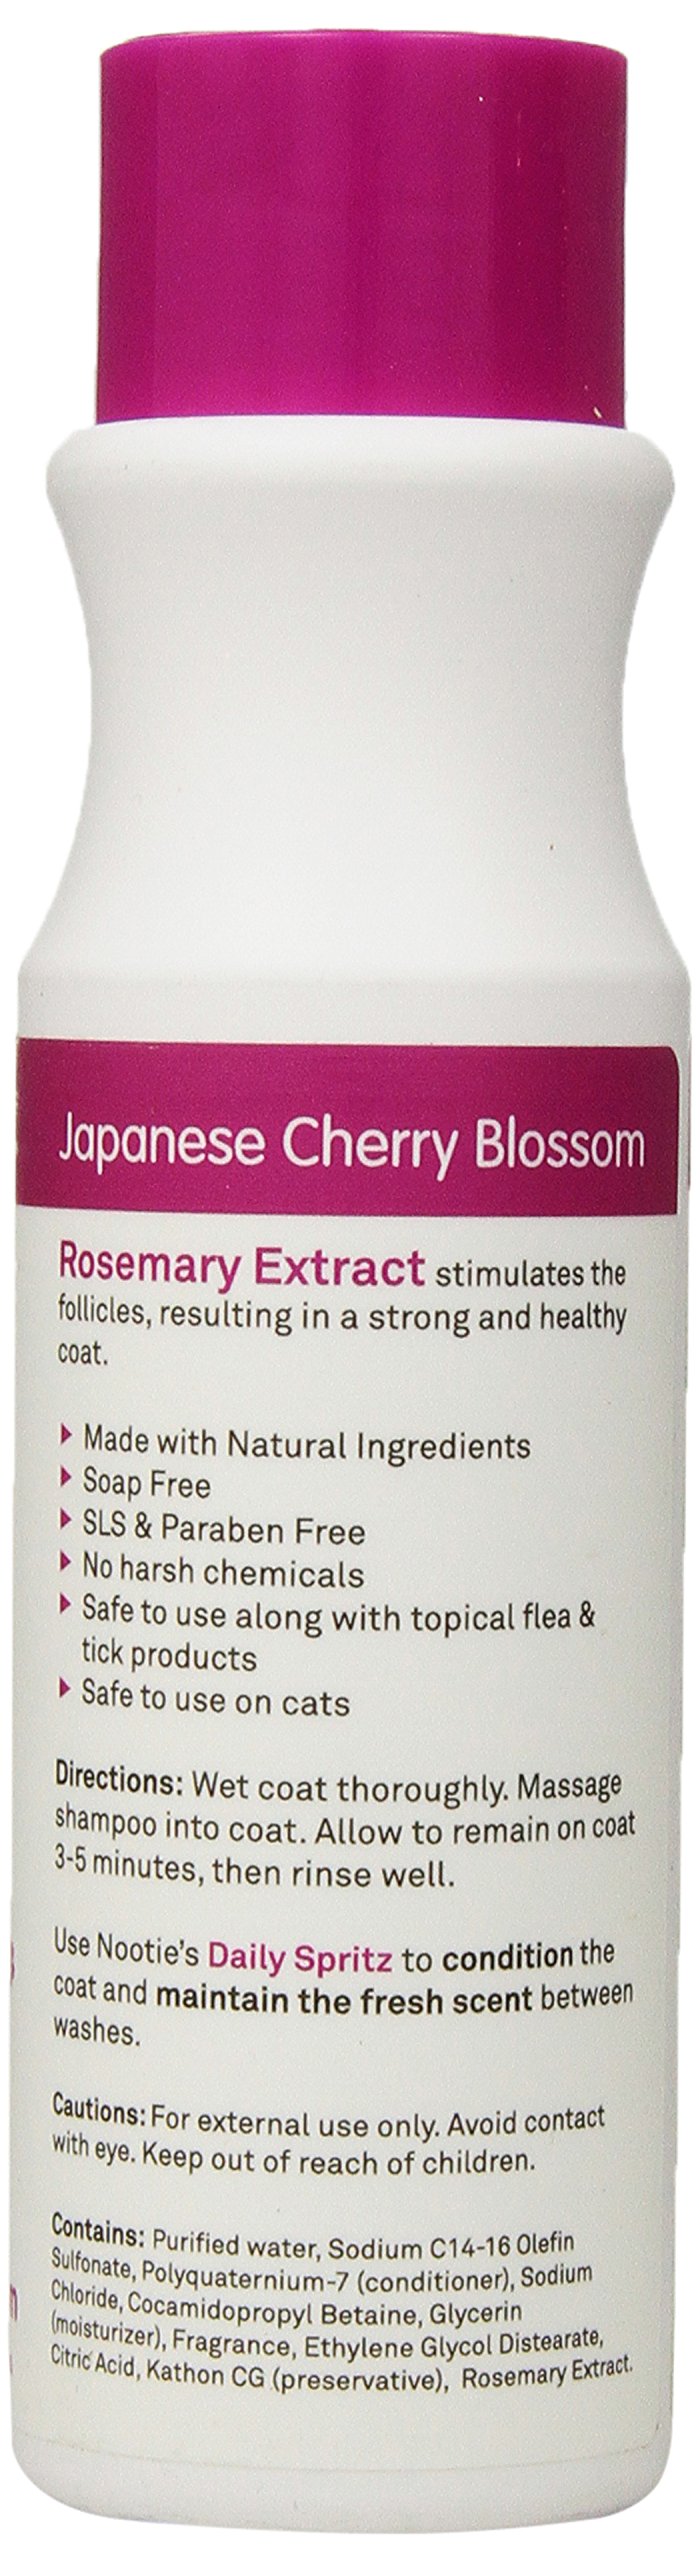 [Australia] - Nootie- Pet Shampoo, 1 Unit 16oz, Japanese Cherry Blossom 